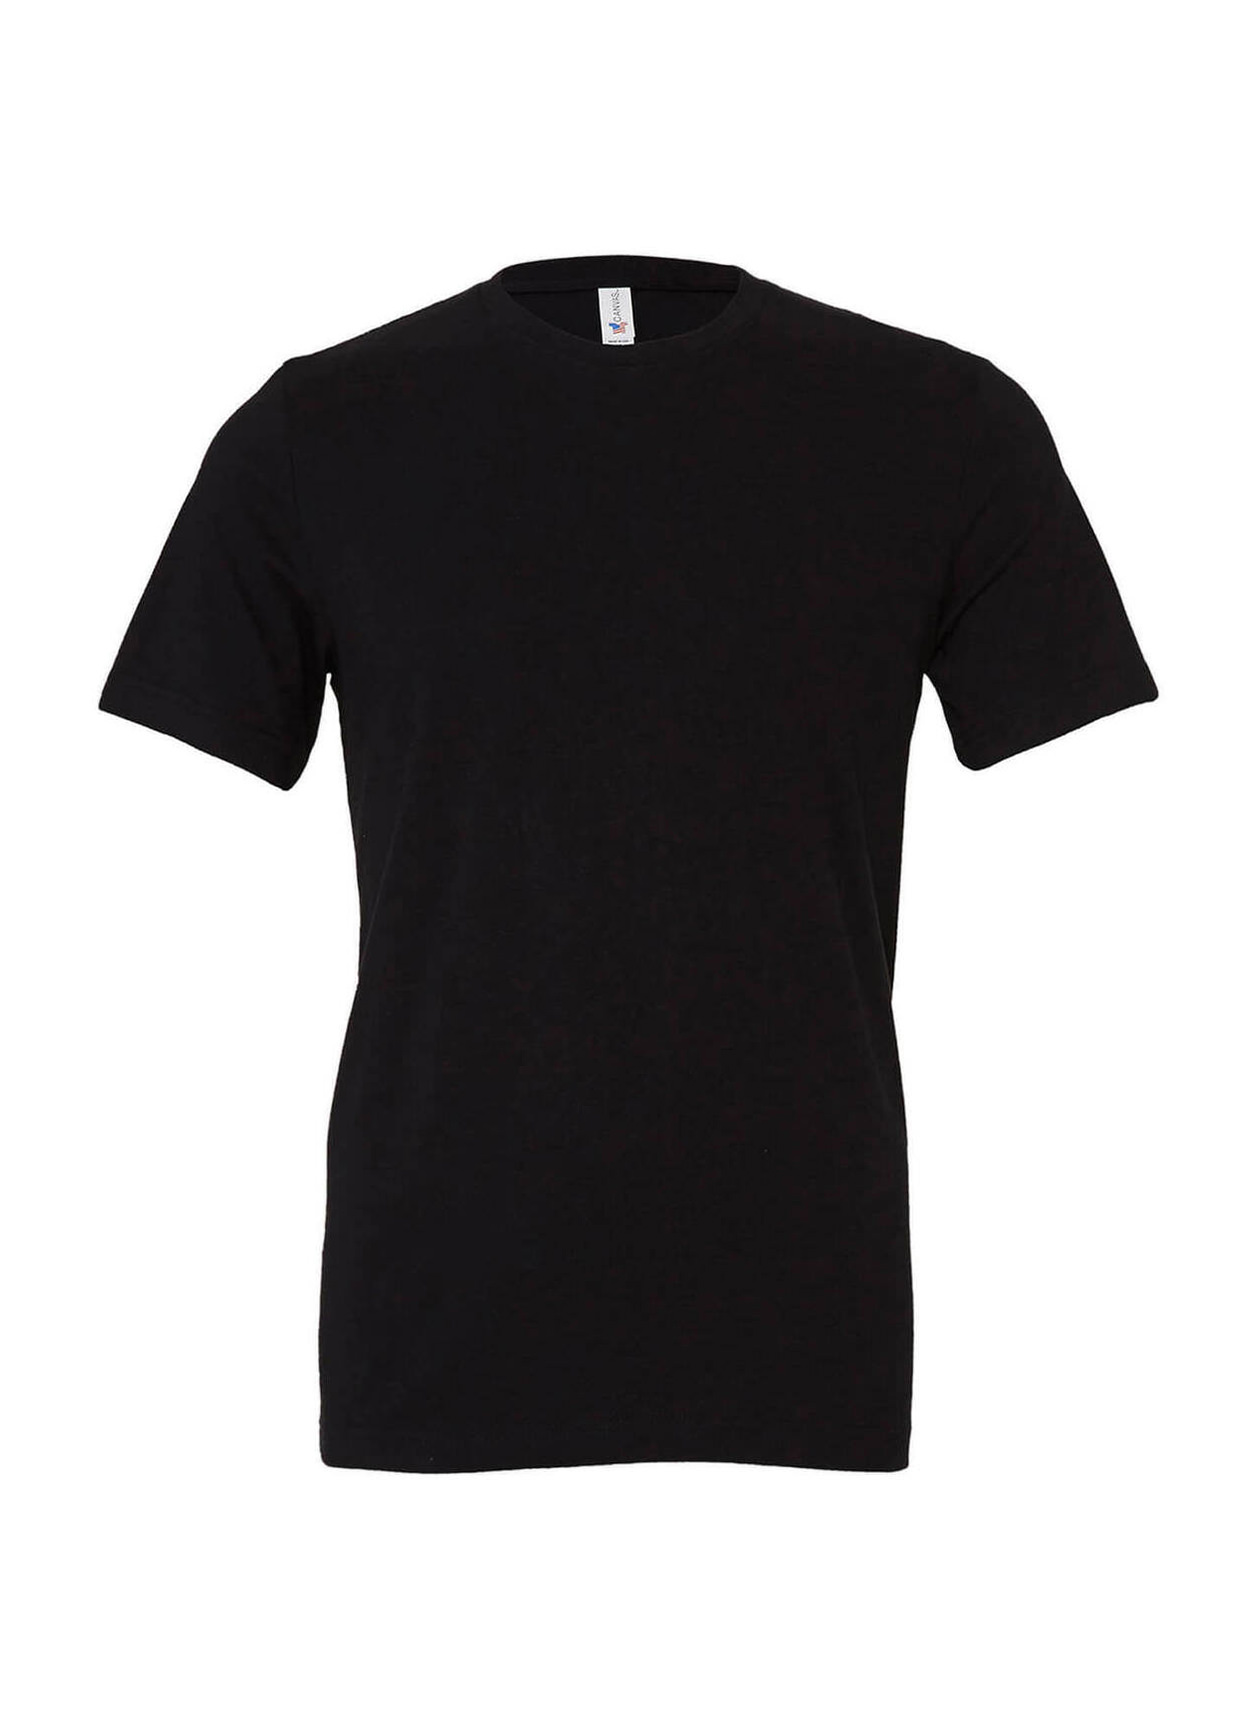 Custom T-shirts | Screen Printed Bella + Canvas Men's Black Jersey T-Shirt